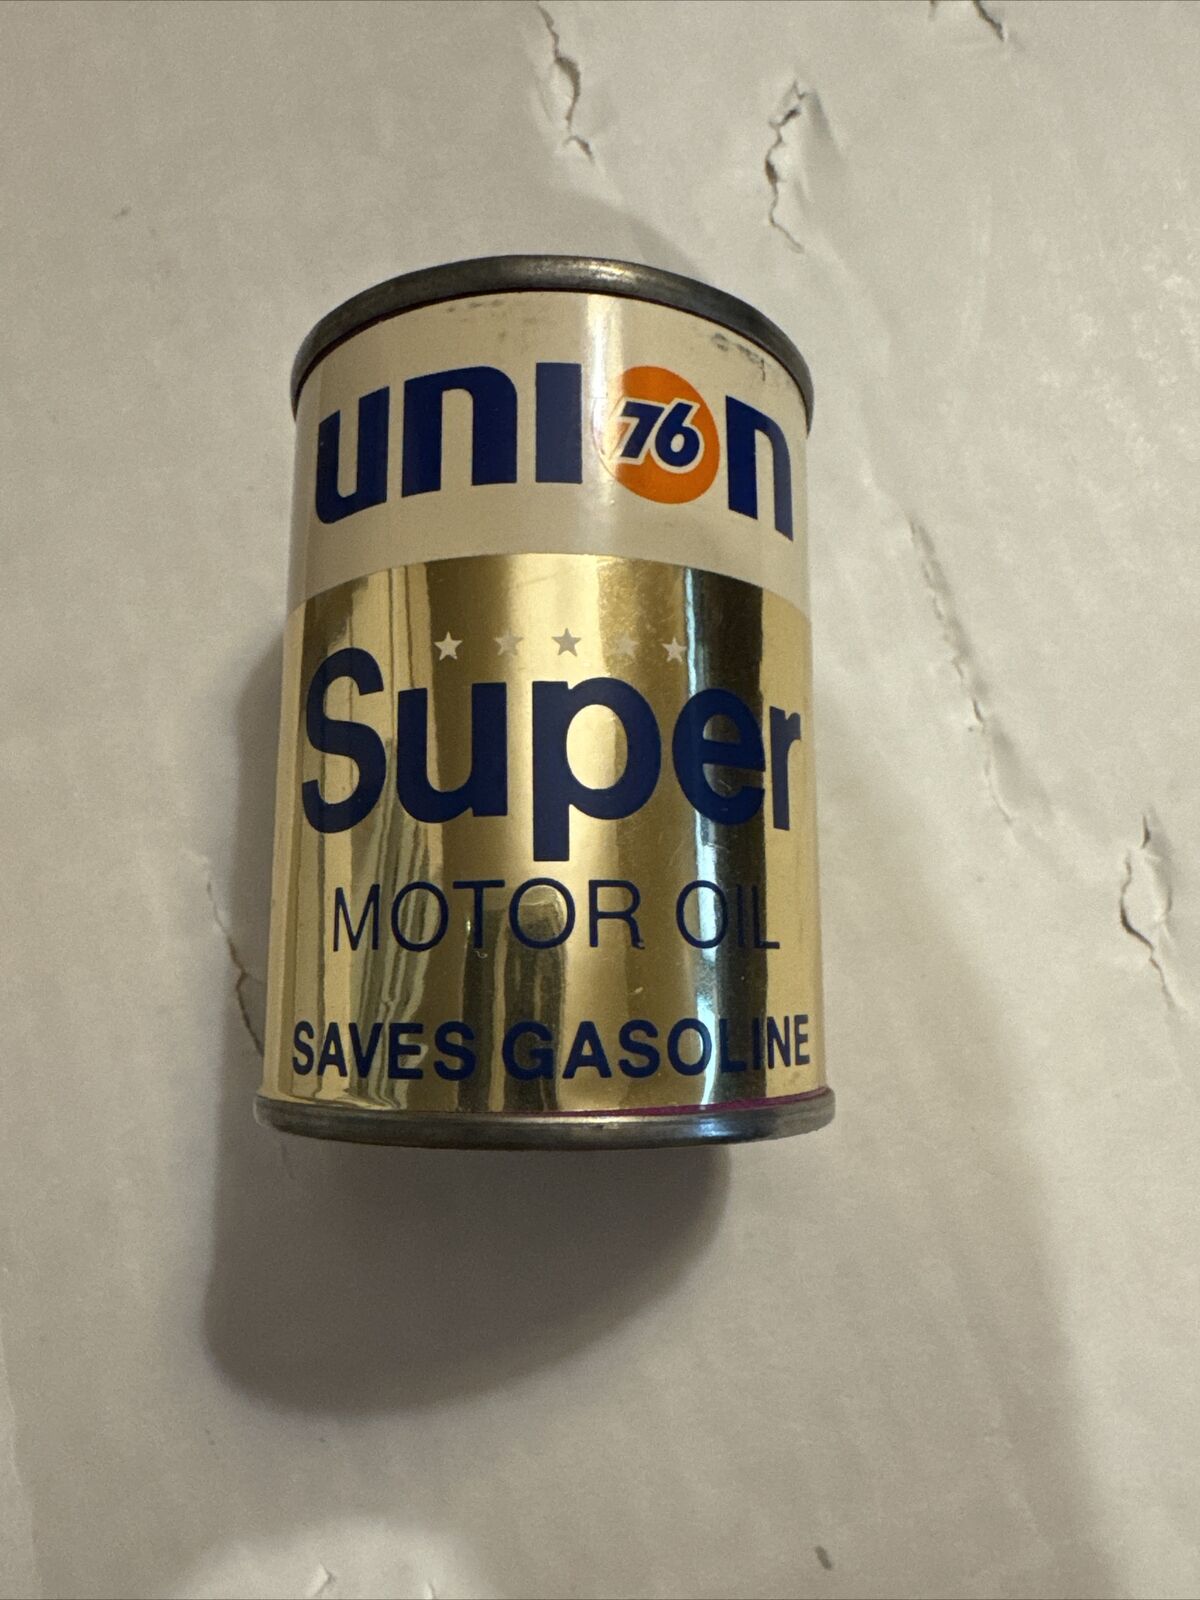 Vintage Union 76 Mini Super Motor Oil Coin Bank